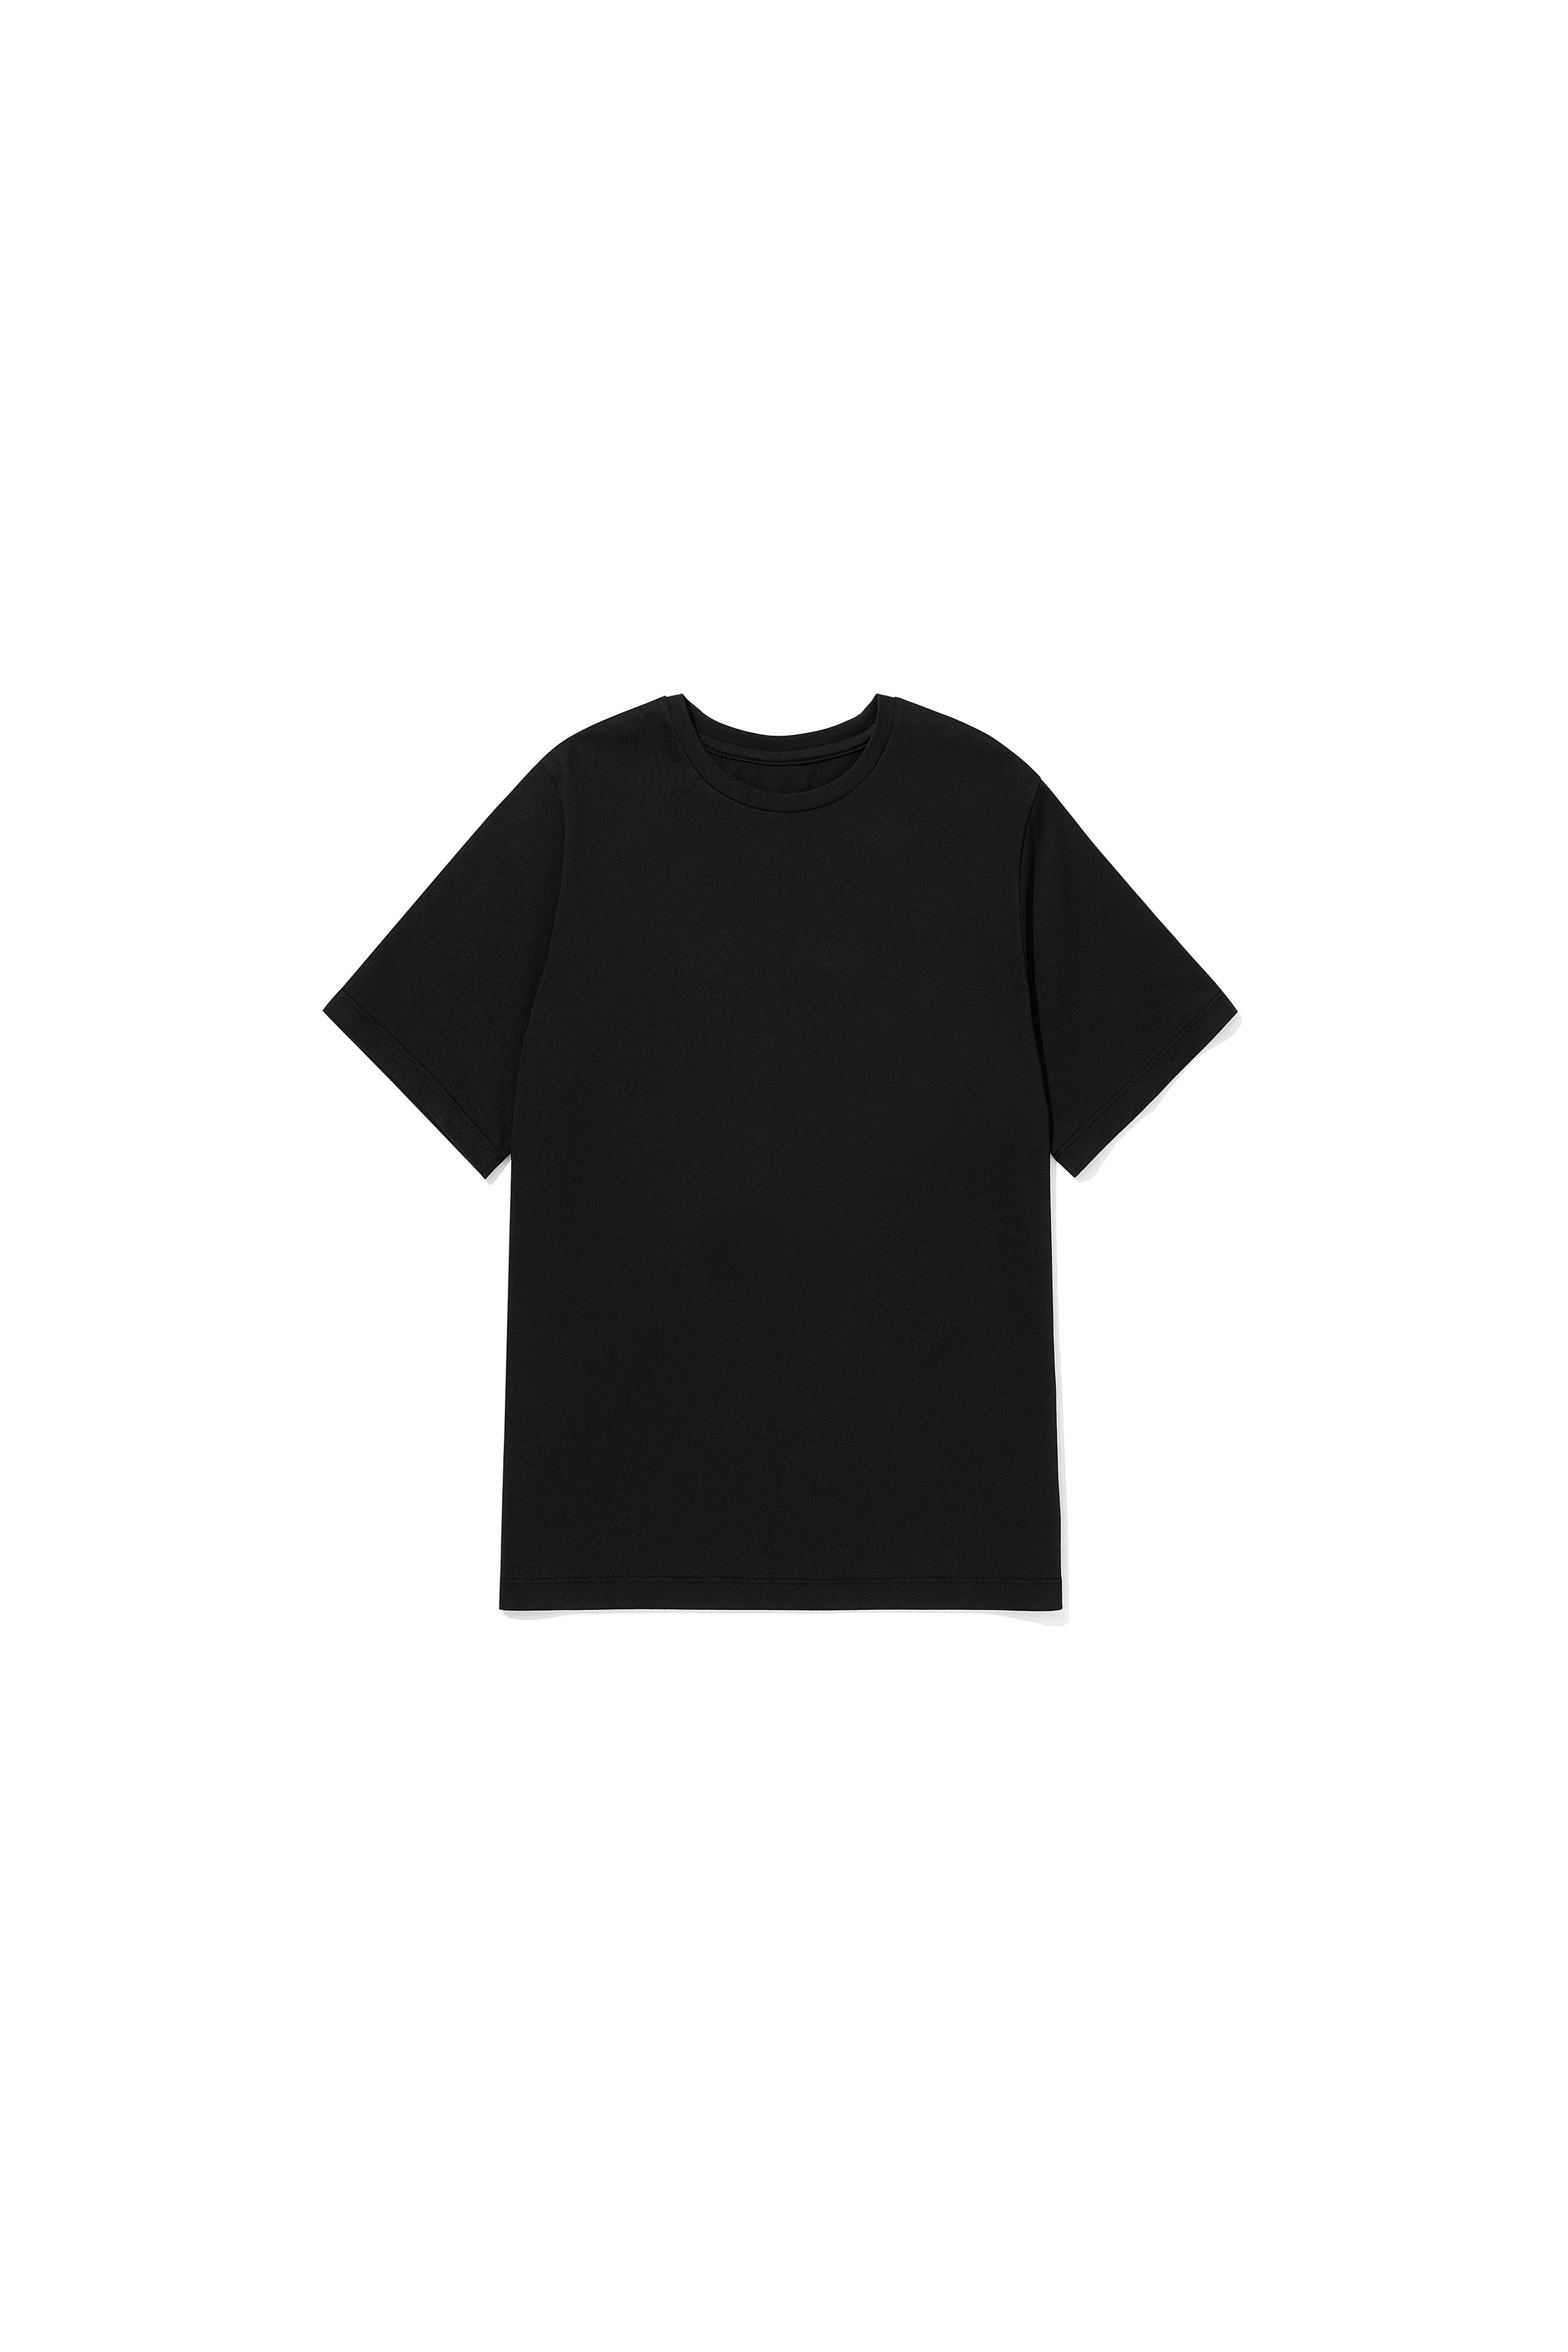 Sliket Cotton T-shirts Black [04.25(THU) 20:00 OPEN]